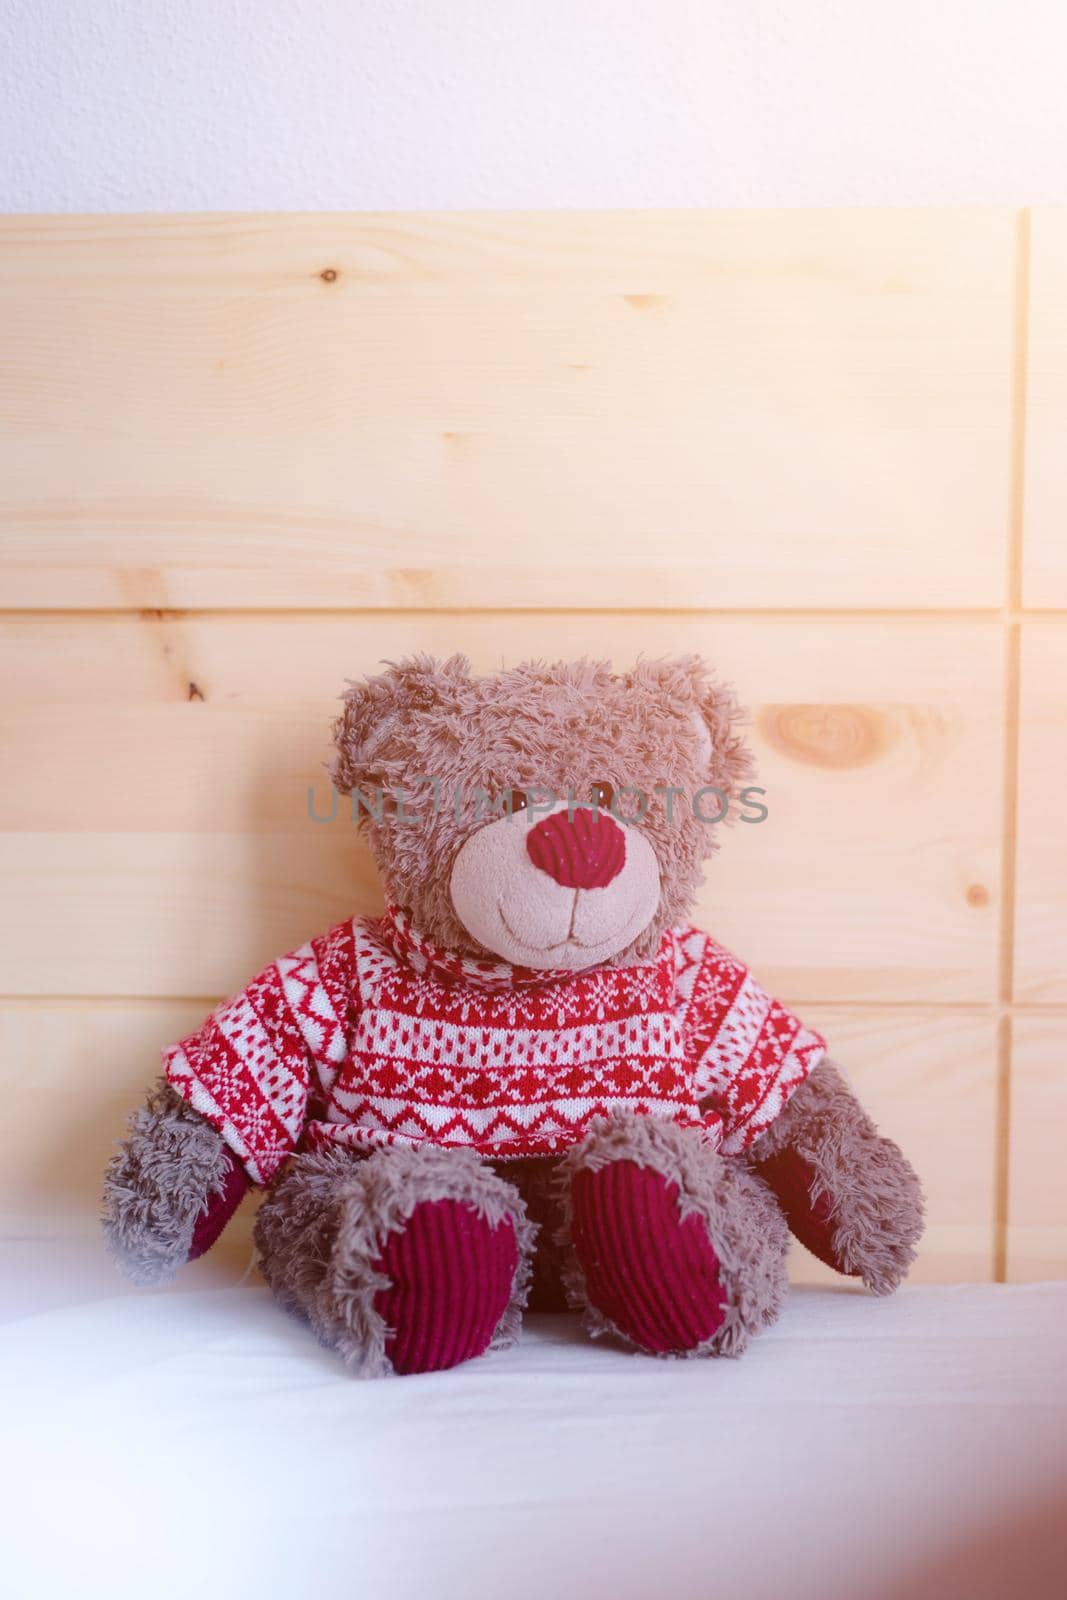 Teddy dream concept: Teddy bear is sitting in a wooden bed, sunlight by Daxenbichler